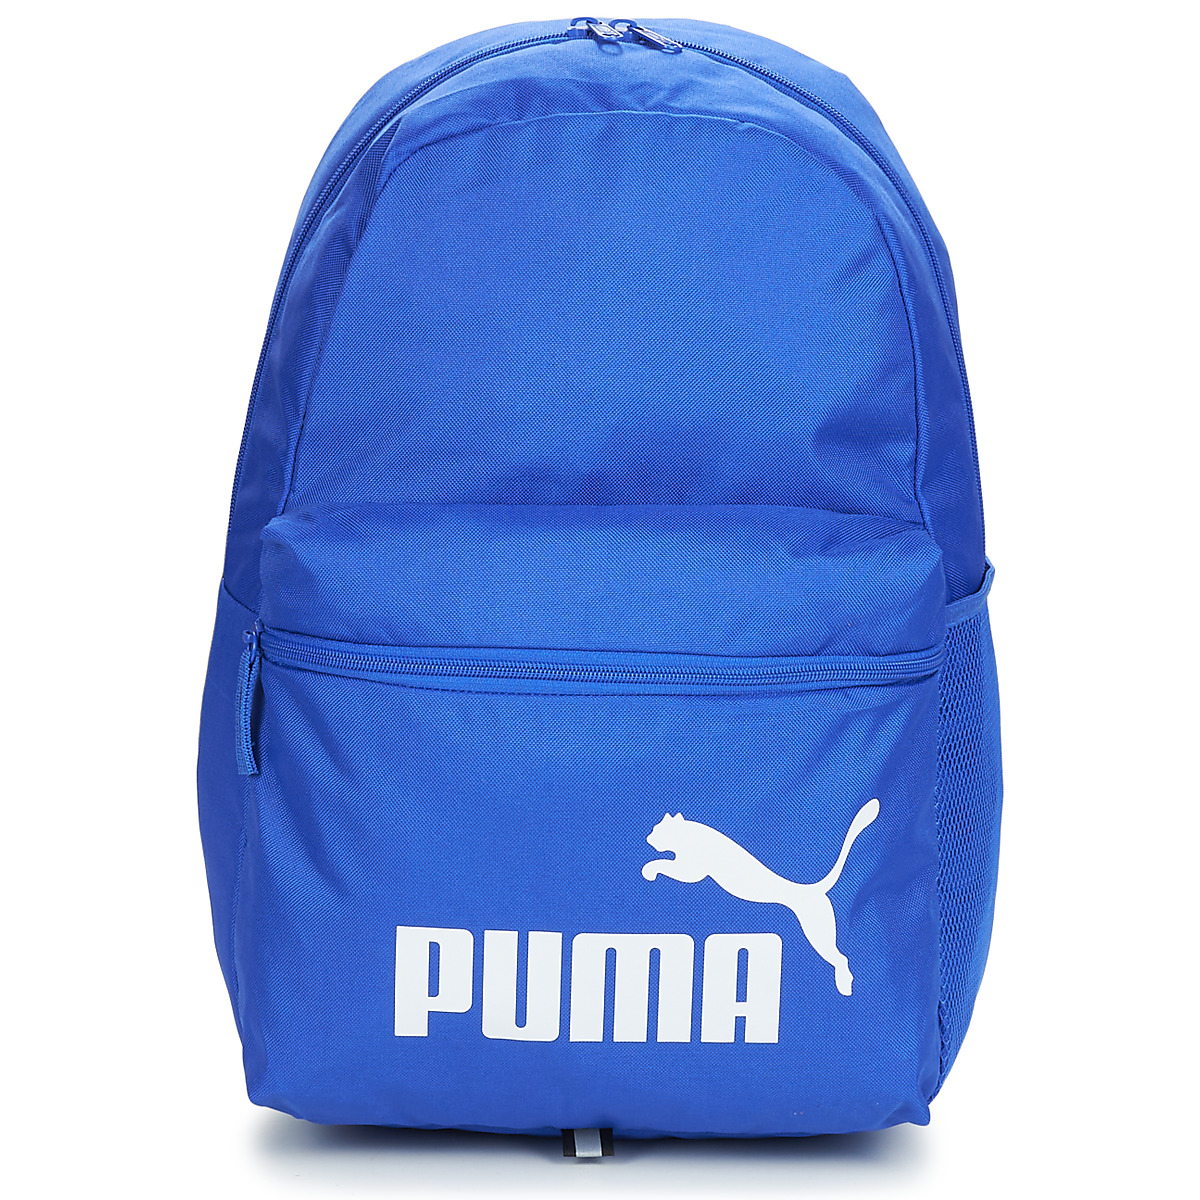 Puma PHASE BACKPACK Azul - Envío gratis   ! - Bolsos Mochila  18,40 €